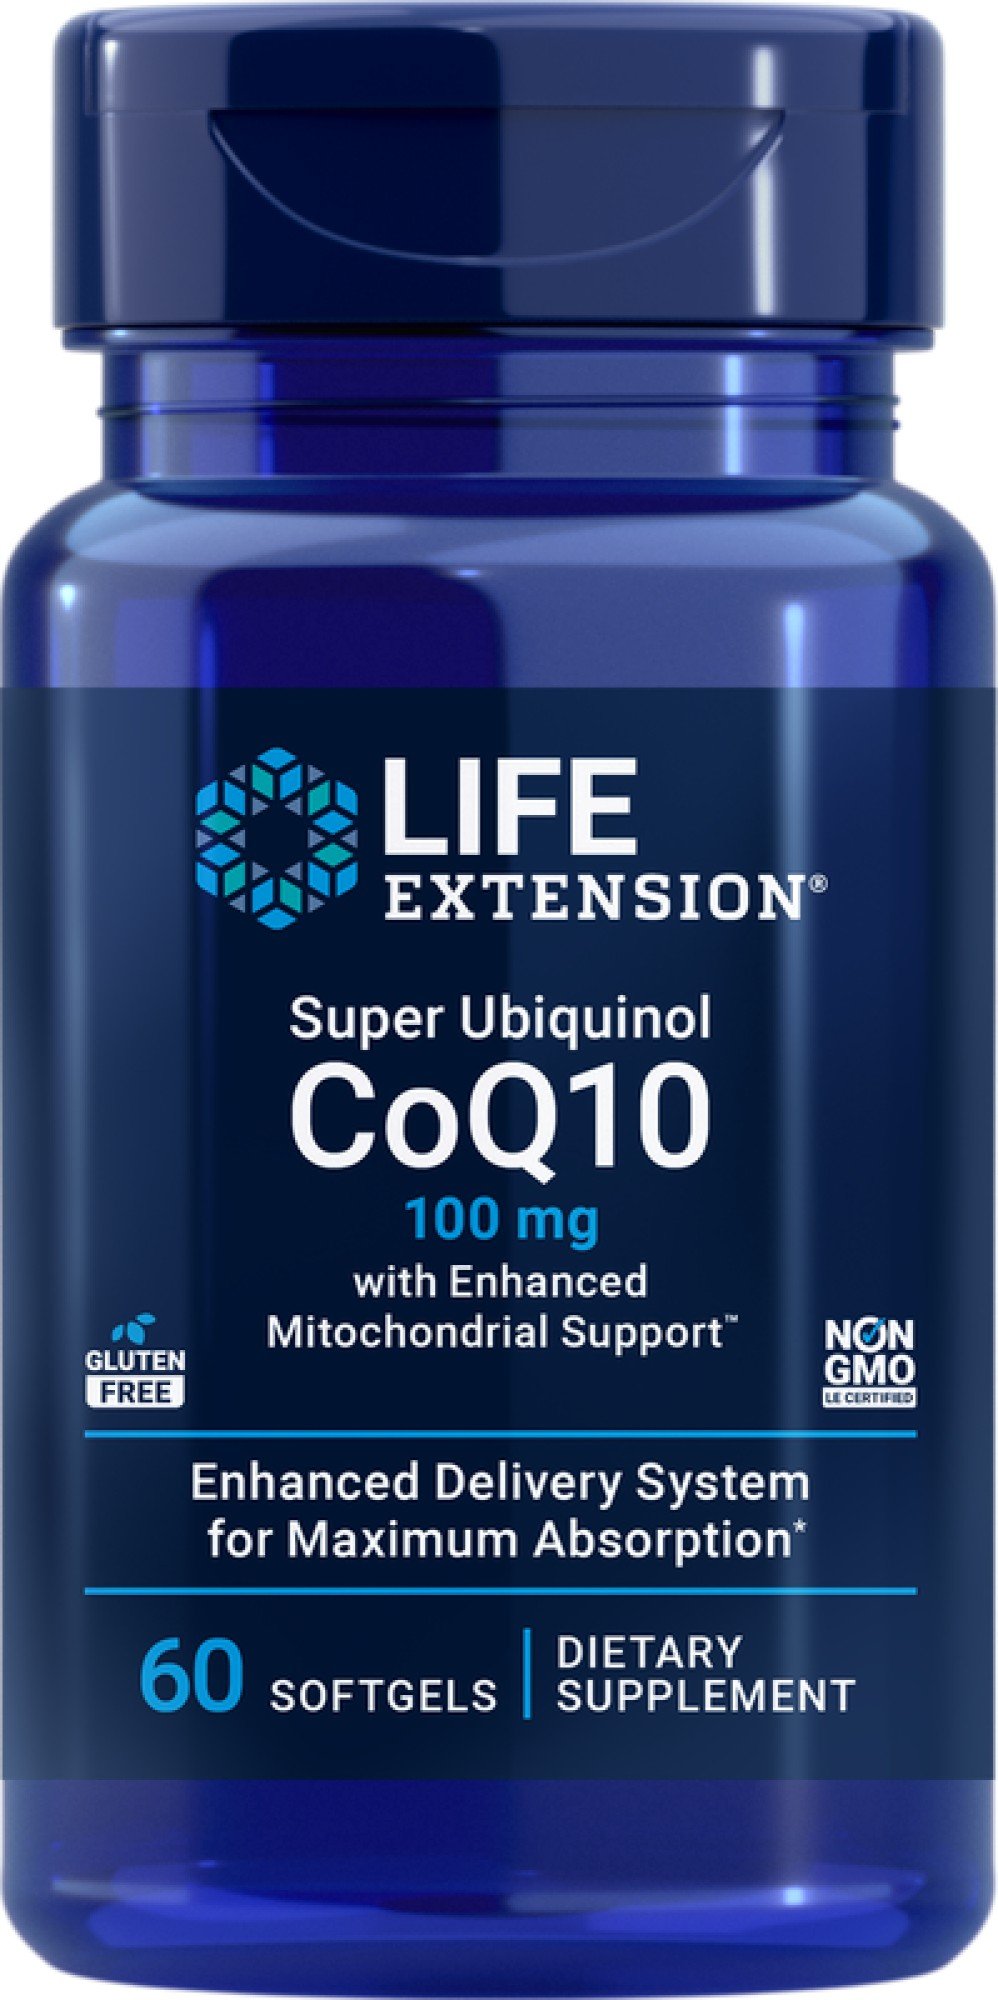 Super Ubiquinol C o Q 10 | Life Extension | 100 milligrams Ubiquinol | Mitochondrial Support | Cardiovascular Health | Gluten Free | Non GMO | Dietary Supplement | 60 Softgels | VitaminLife